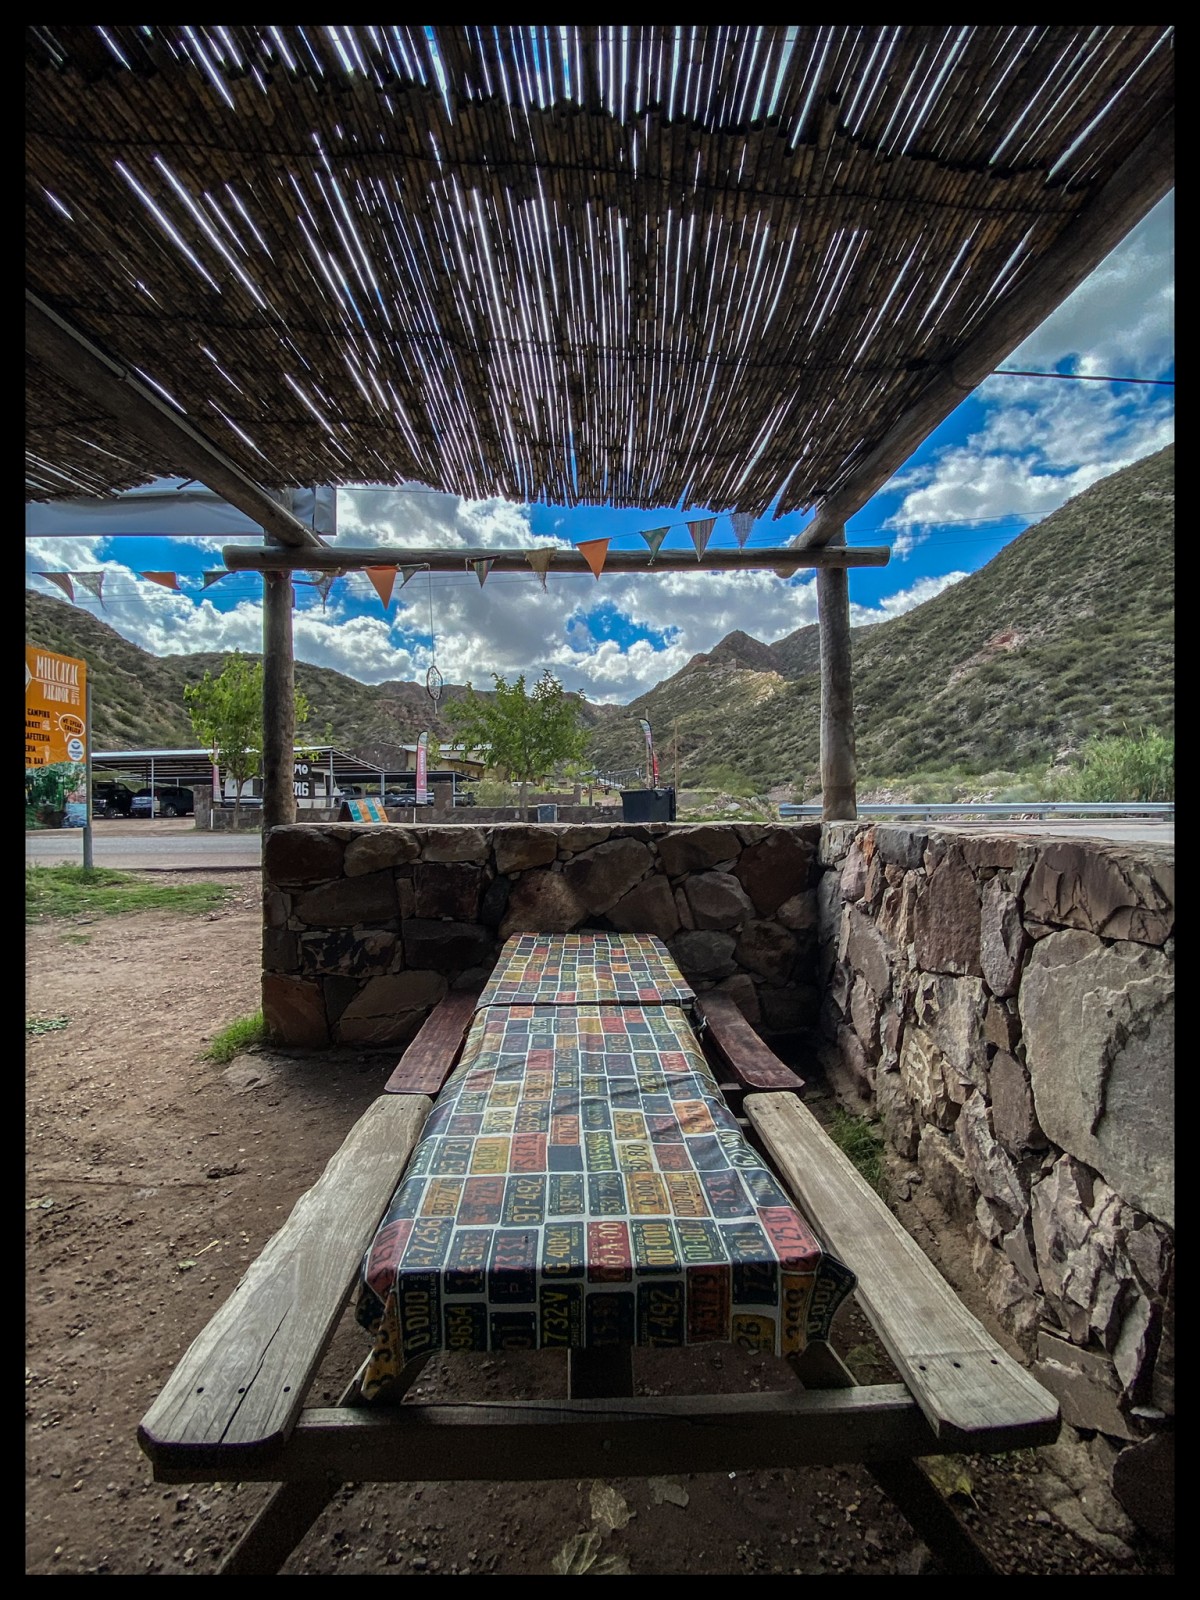  ©Grinblat - En una ruta de Mendoza